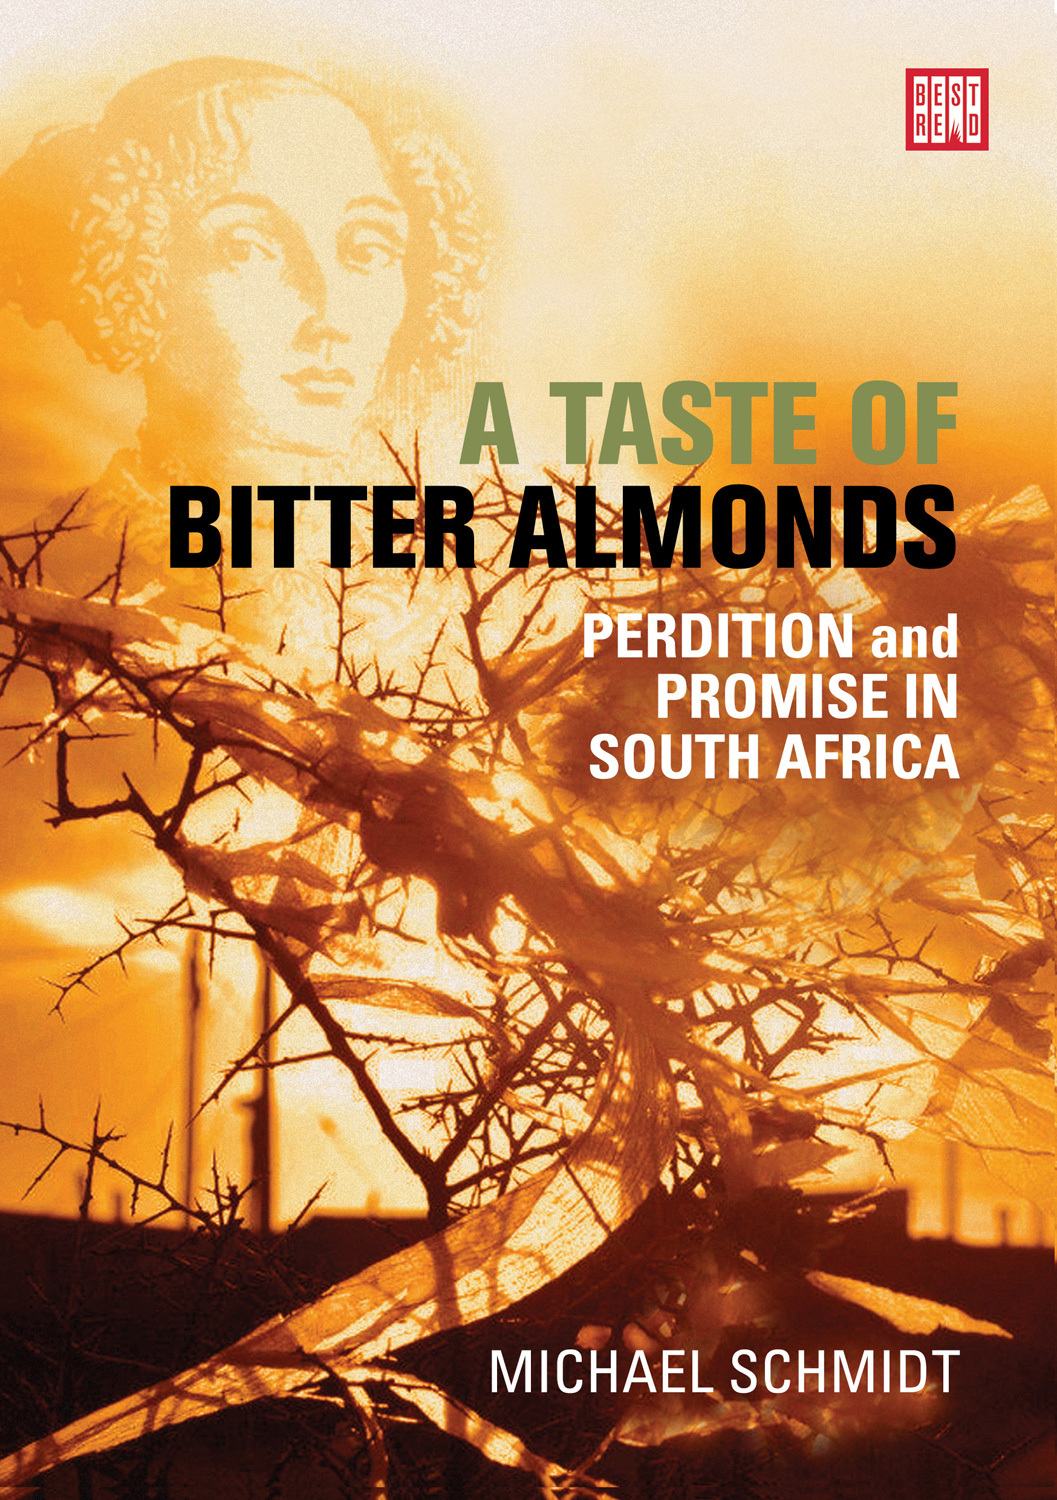 A Taste of Bitter Almonds by Michael Schmidt